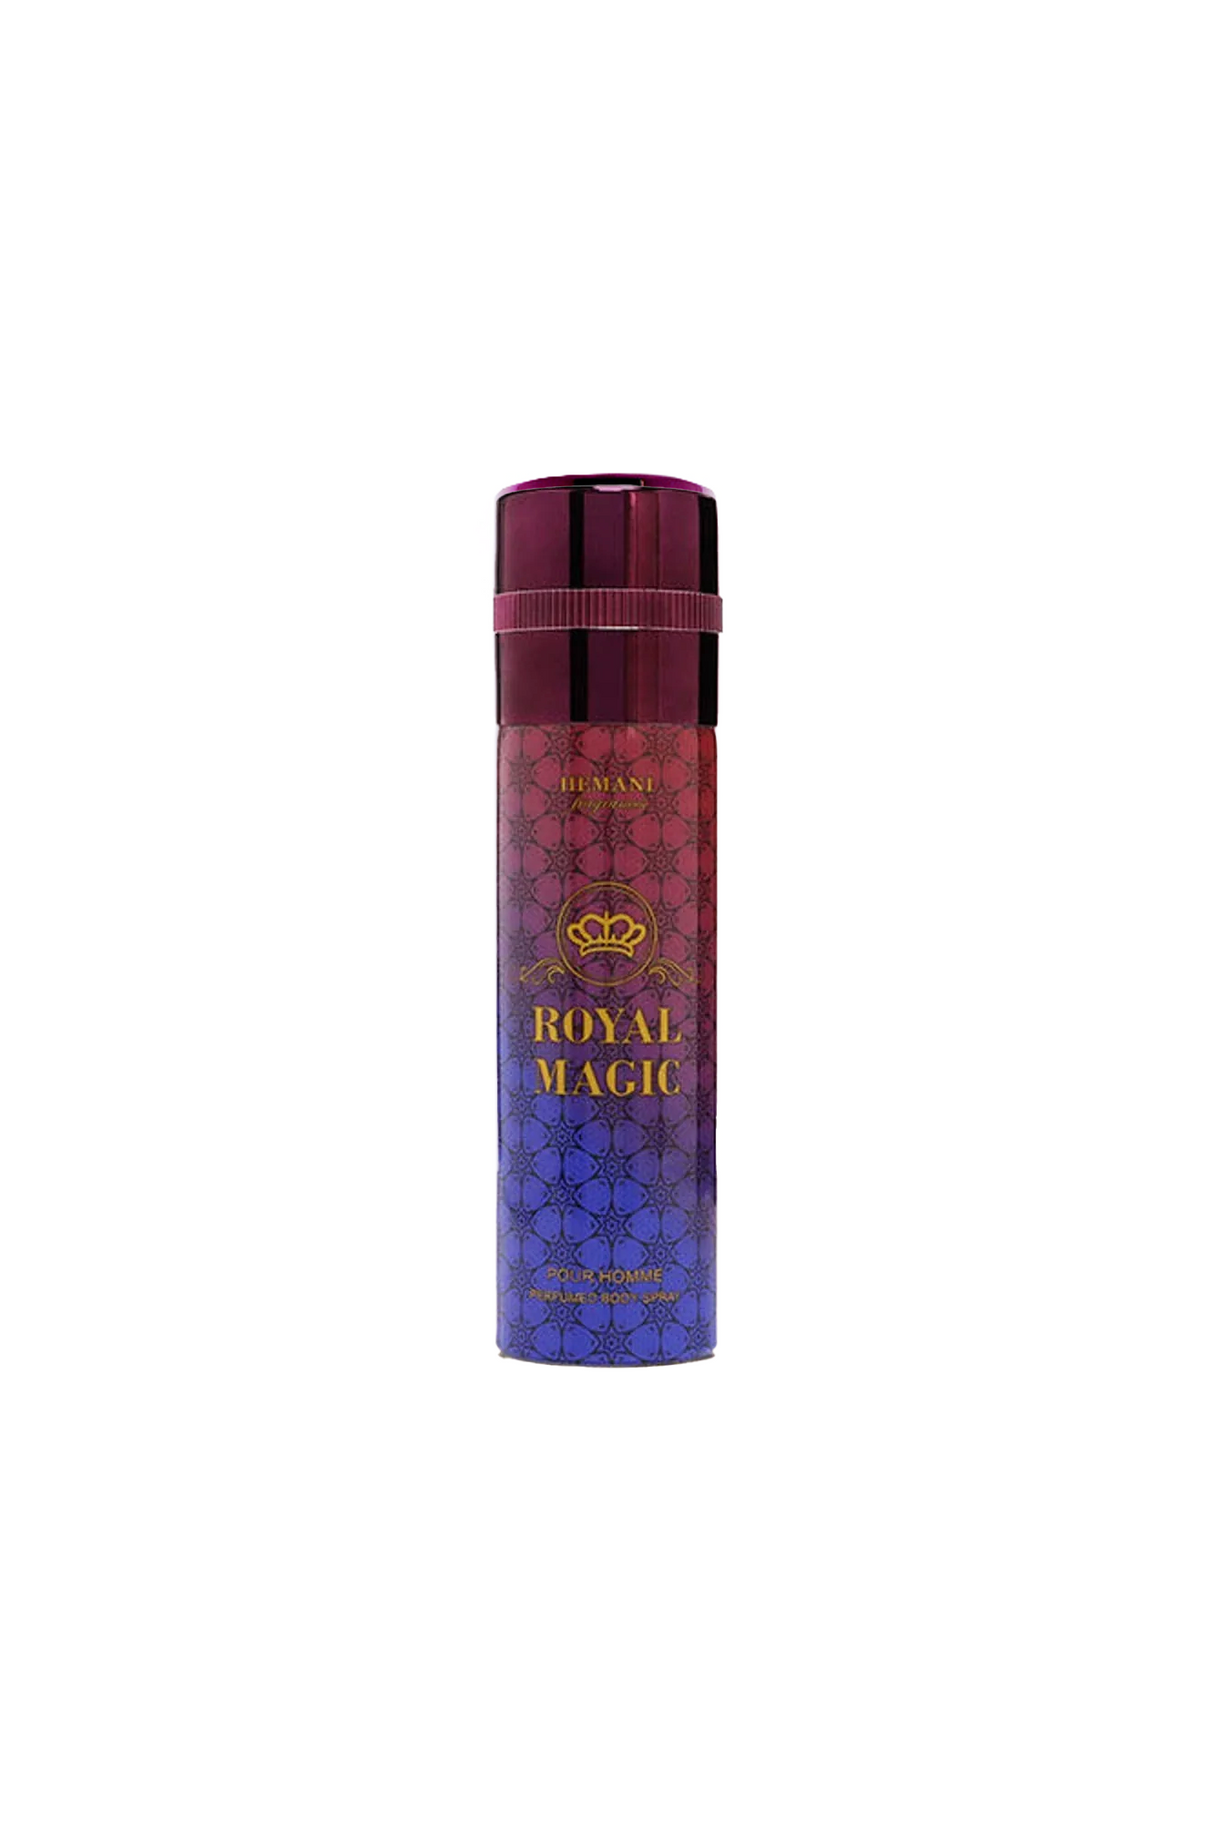 hemani royal magic deodorant body spray 200ml for men